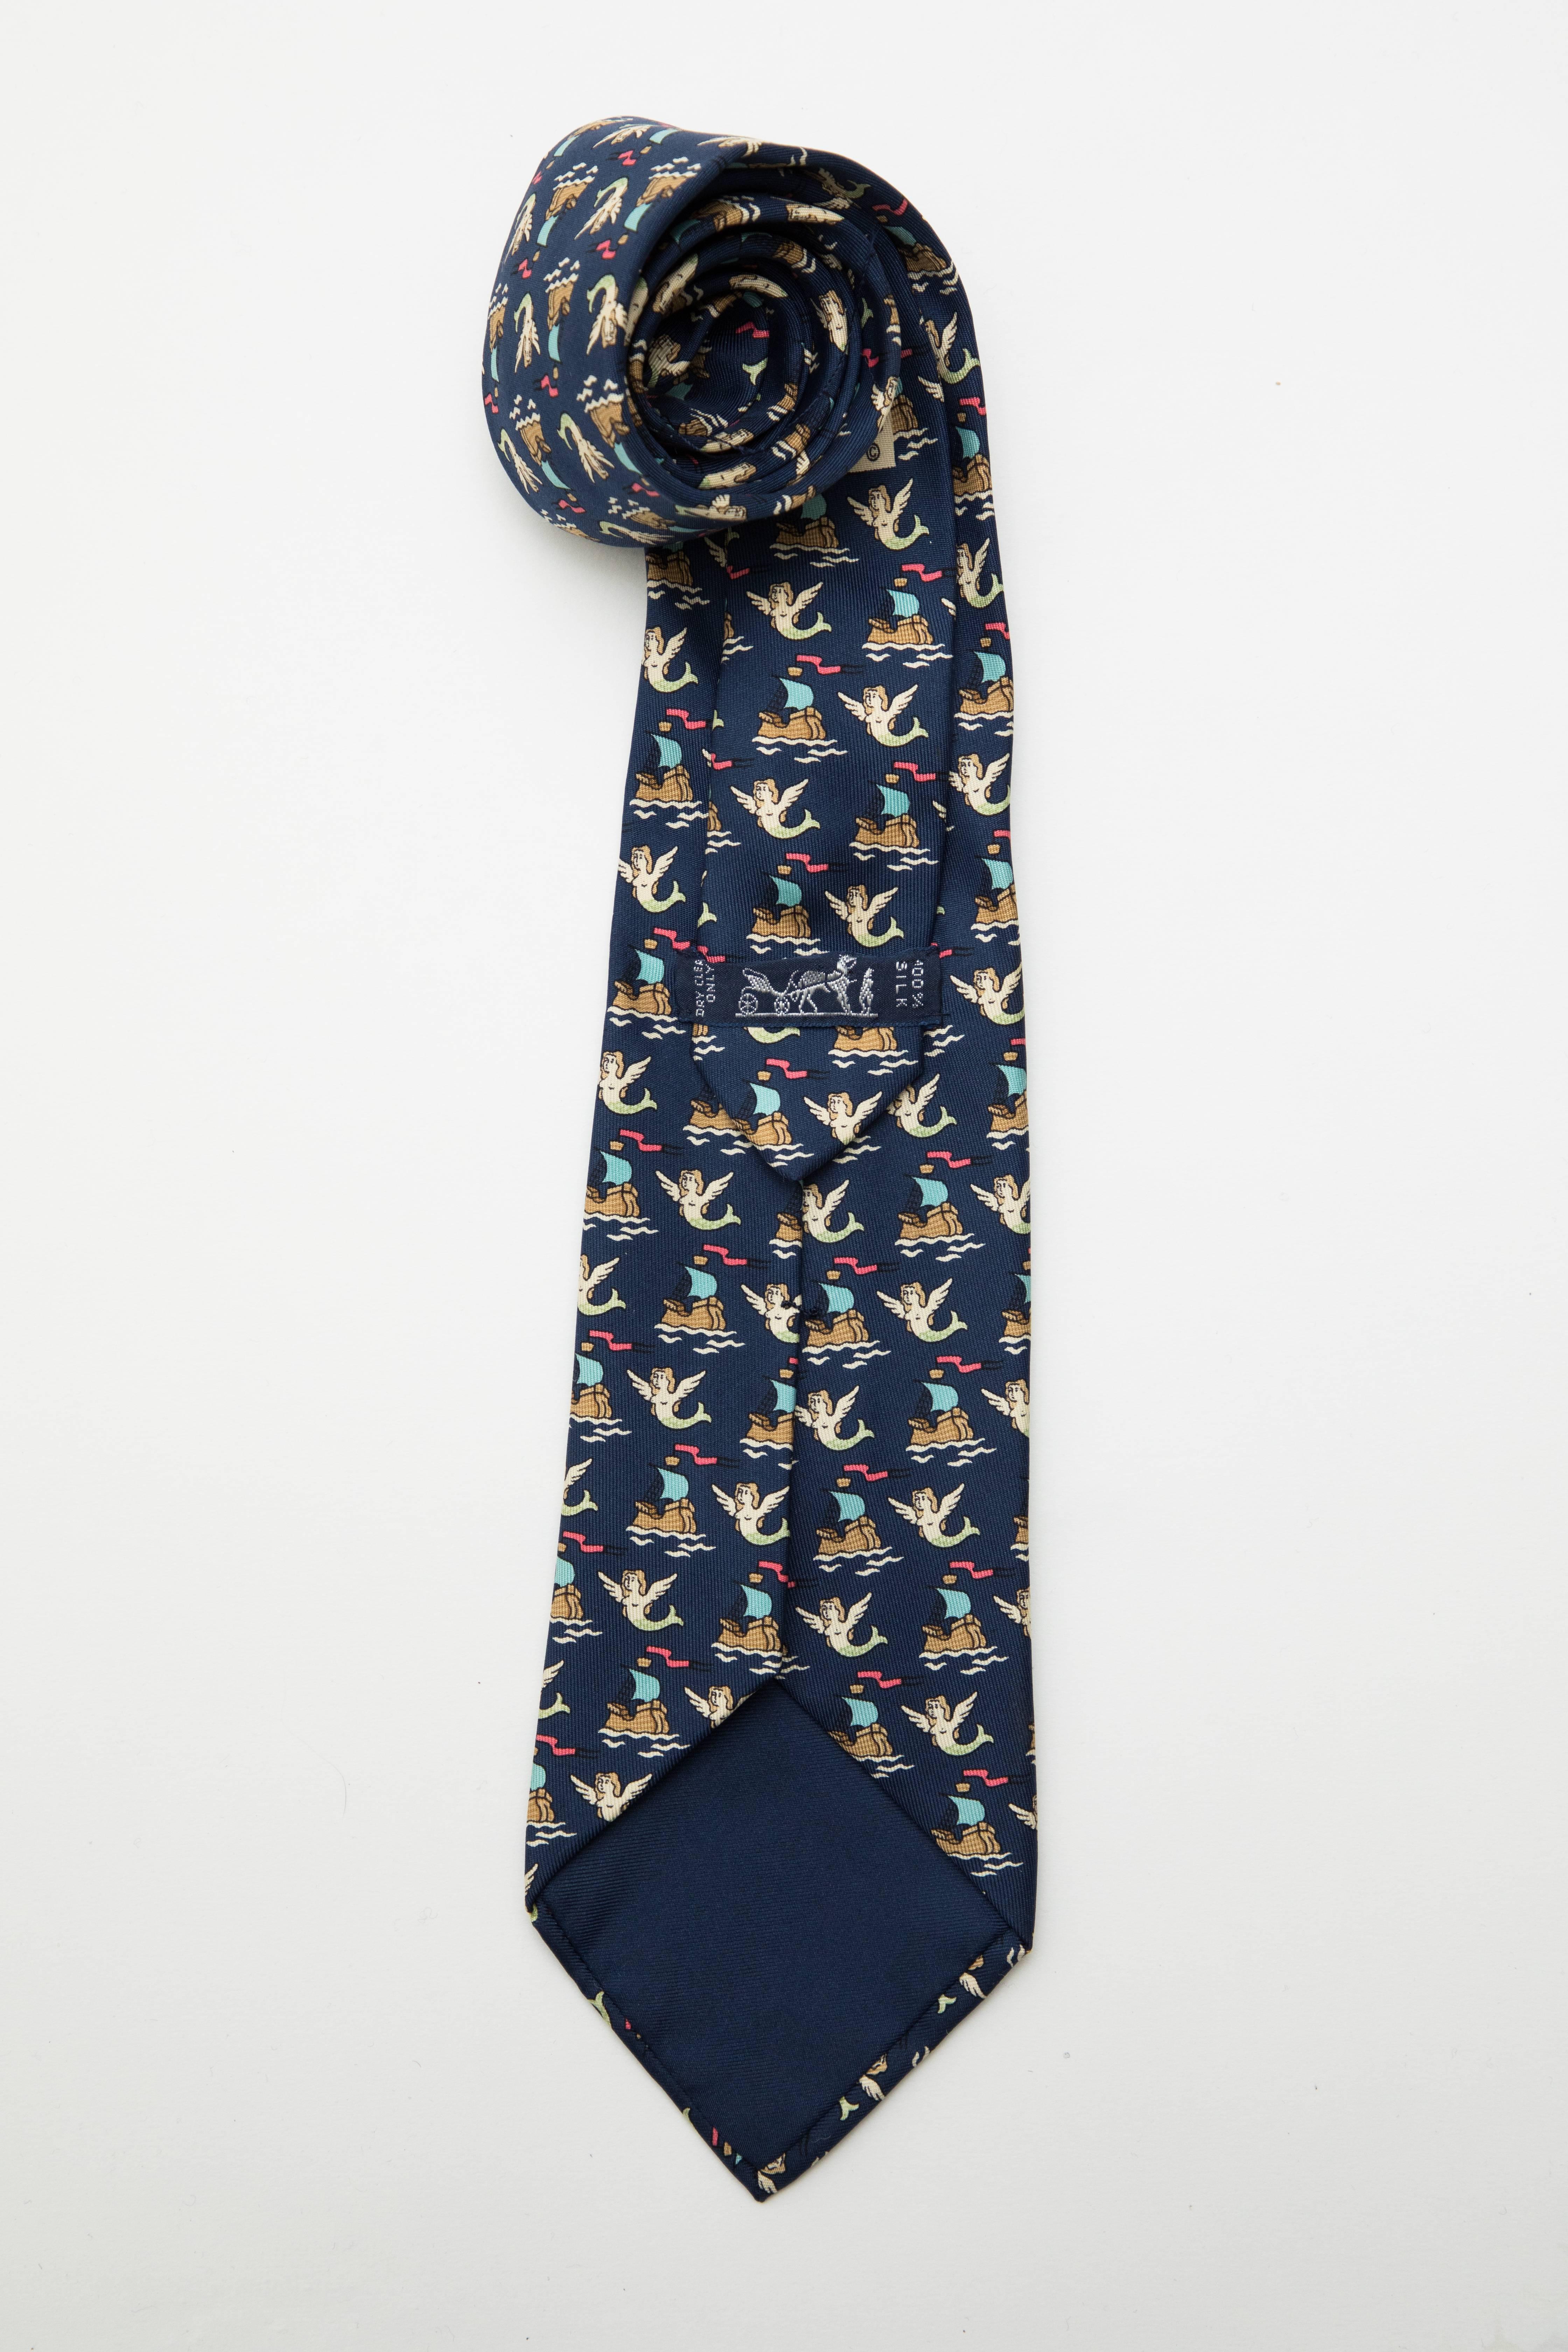 Hermes, Circa 1990's navy blue silk tie.

Length: 58, Width 3.5
